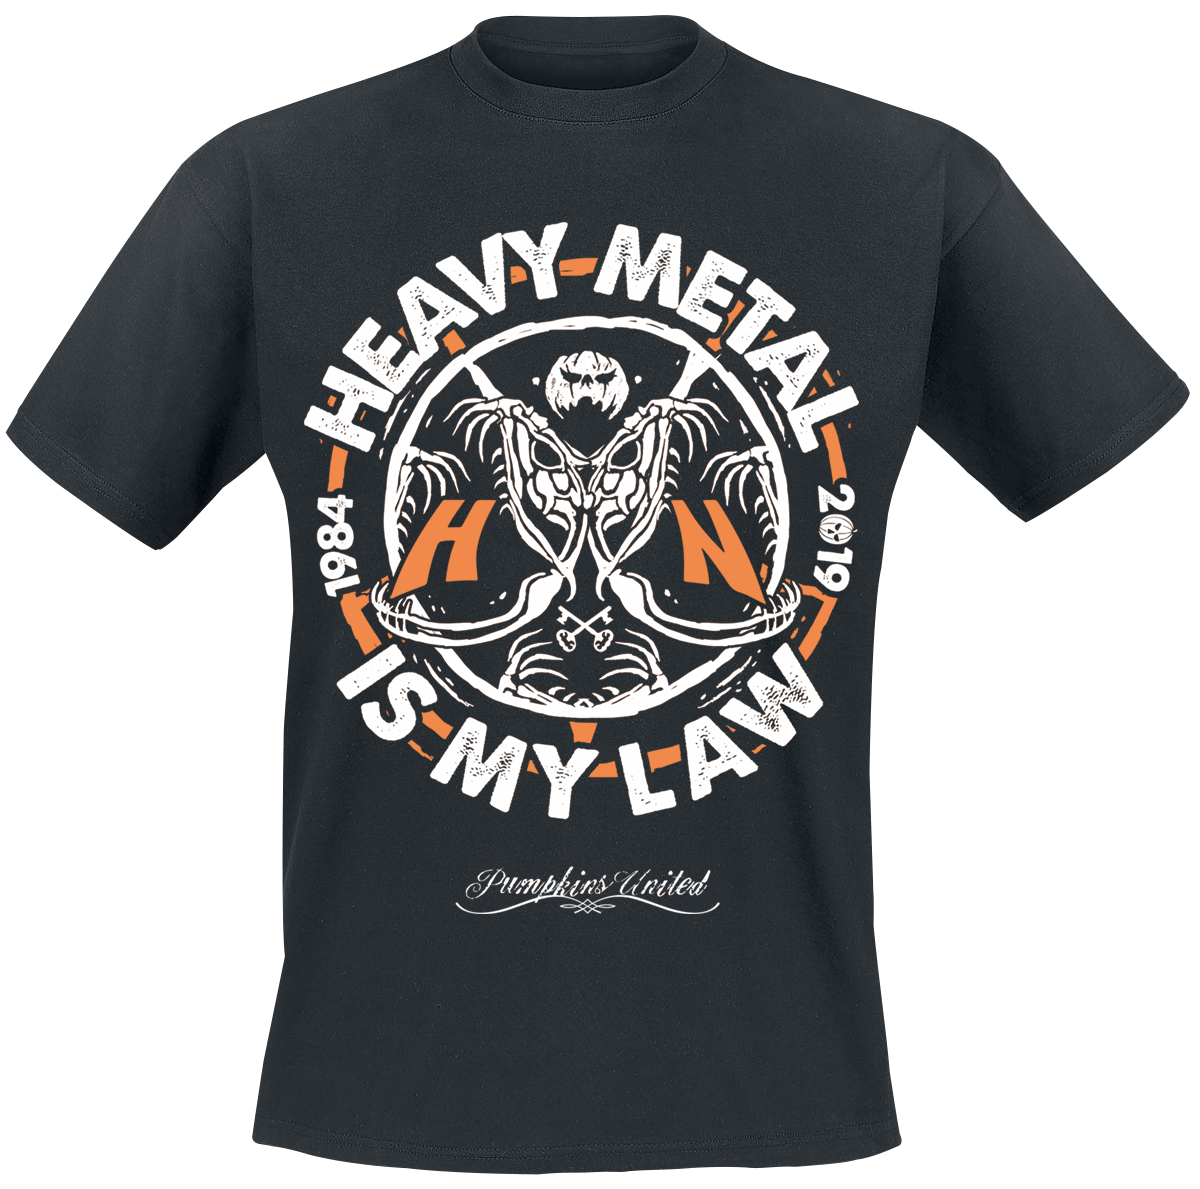 Helloween - Heavy Metal Is My Law - T-Shirt - black image